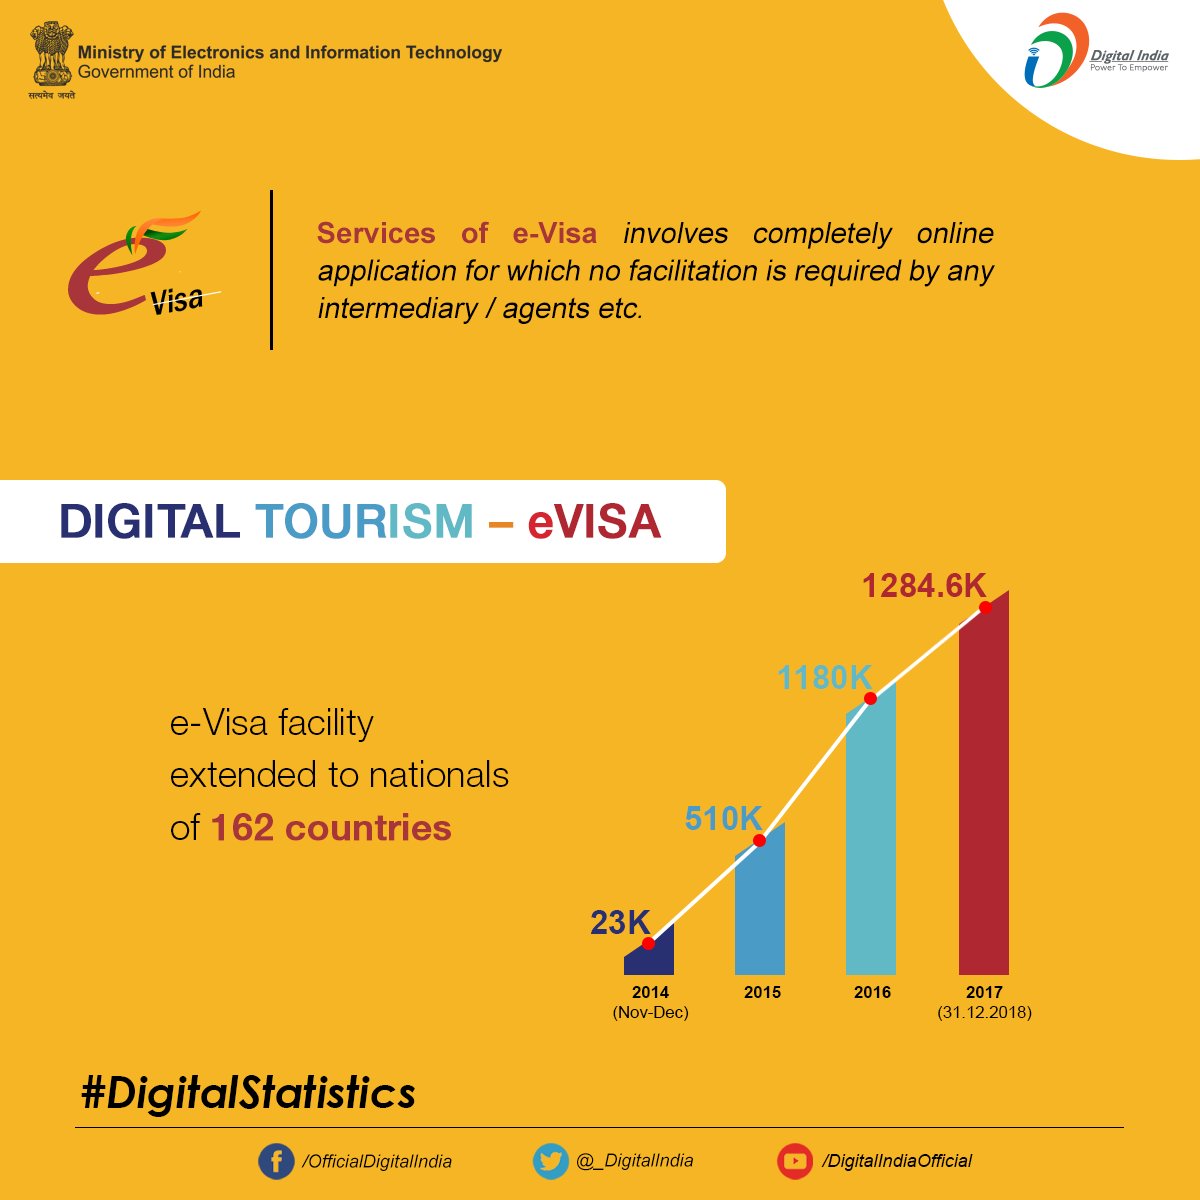 #DigitalStatistics | Some notable rising figures in eVisa under the impact of #DigitalTourism. 

For more information - indianvisaonline.gov.in/evisa/tvoa.html